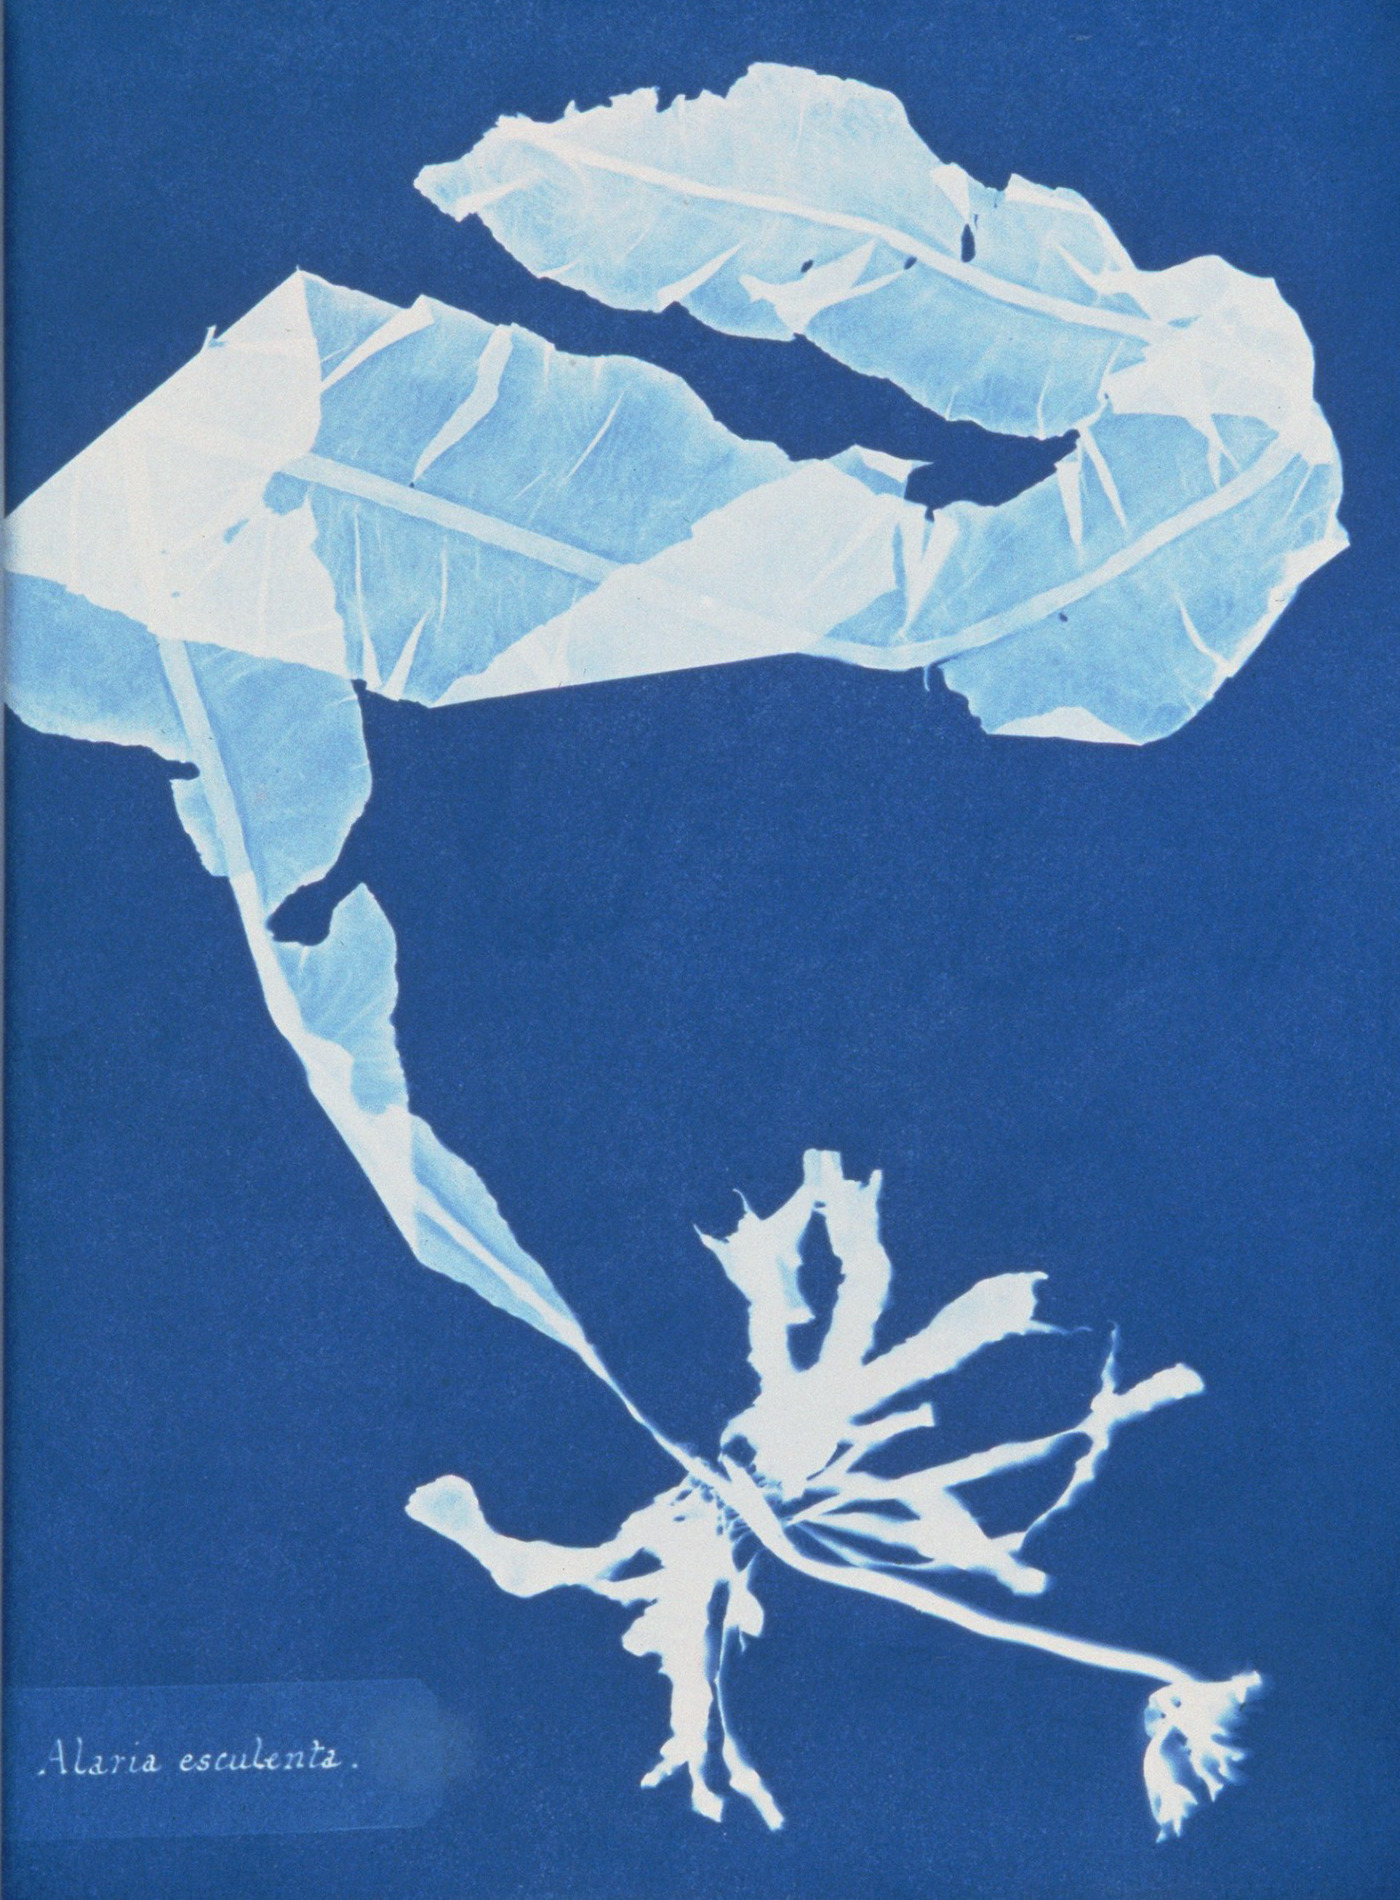 Alaria esculenta. Courtesy of the Spencer Collection, The New York Public Library